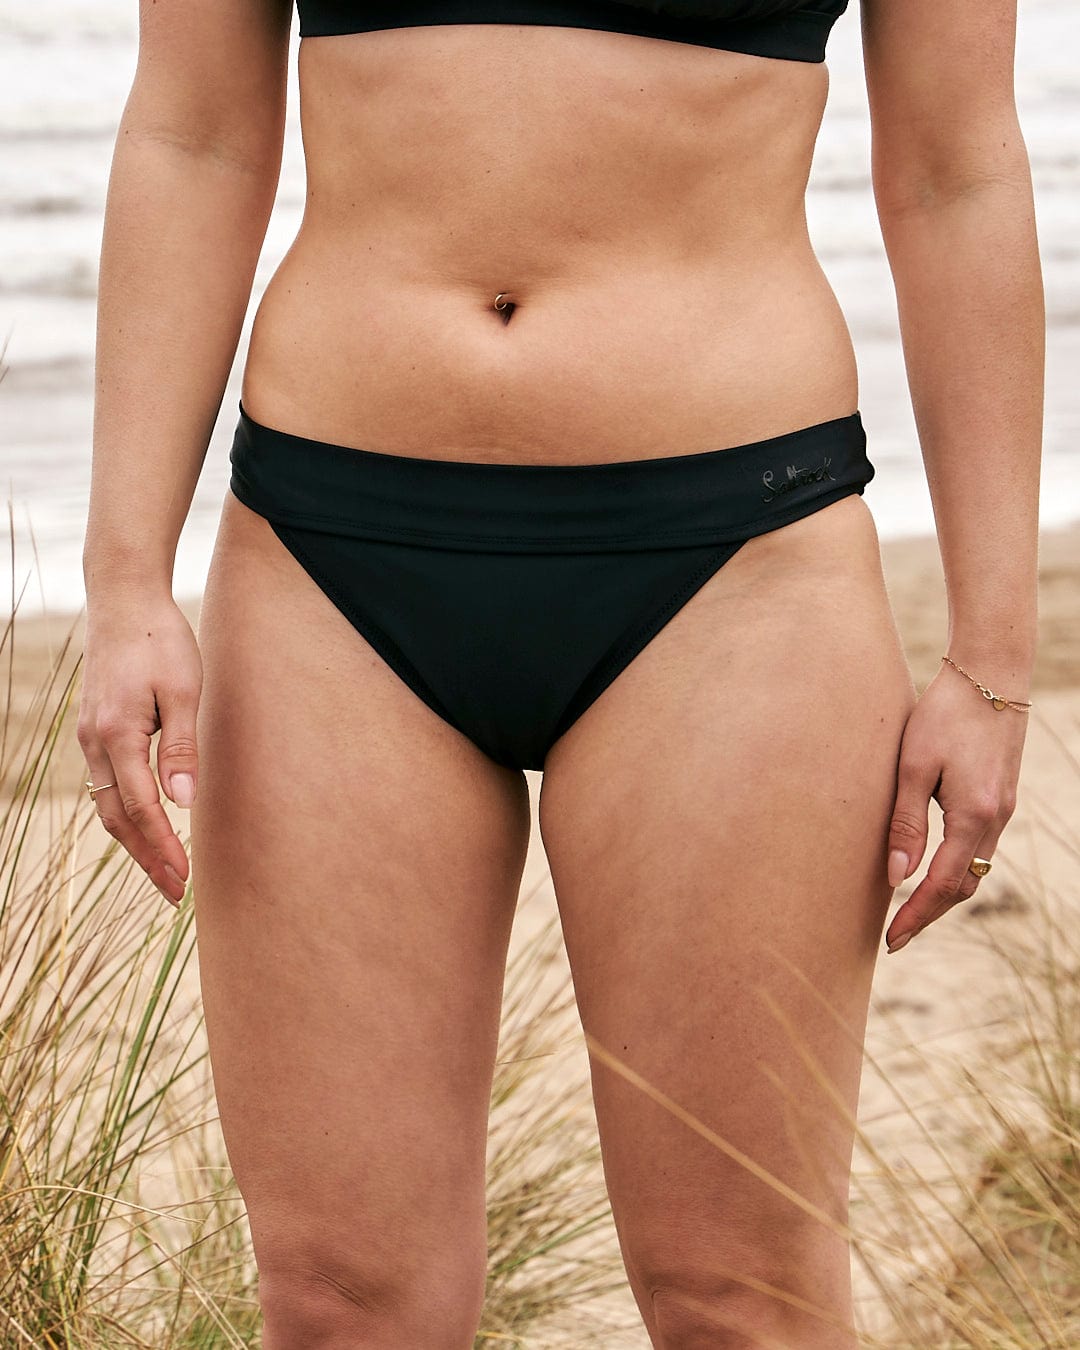 A woman in a Rosie - Womens Bikini Bottom - Black from Saltrock standing on the beach.